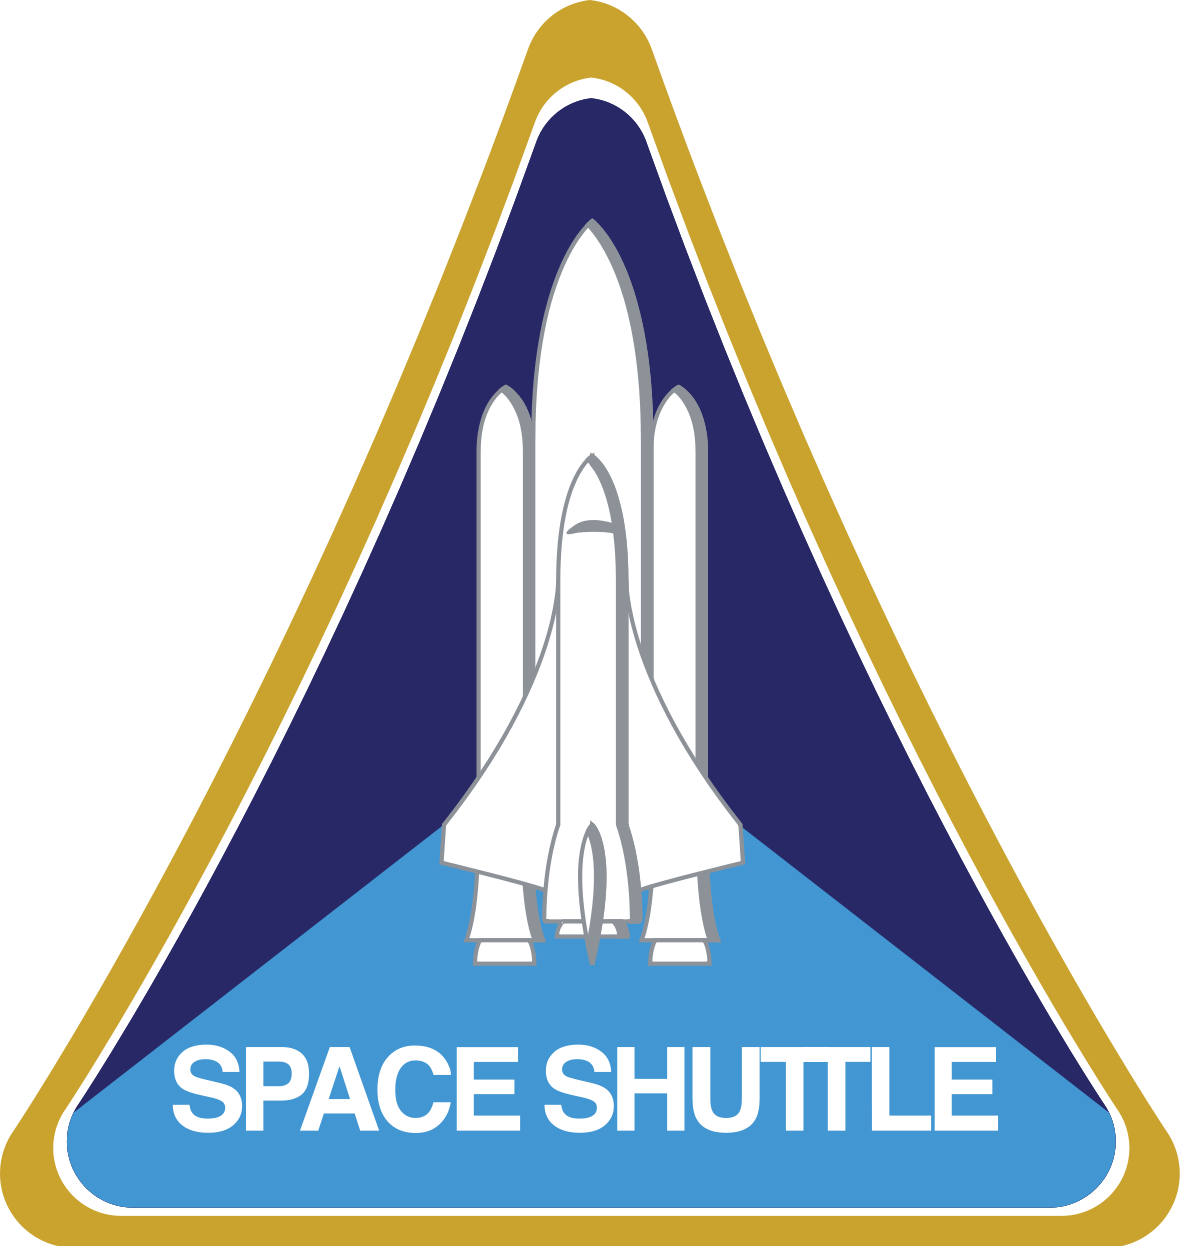 NACA NASA's Old Logo - Space Shuttle program